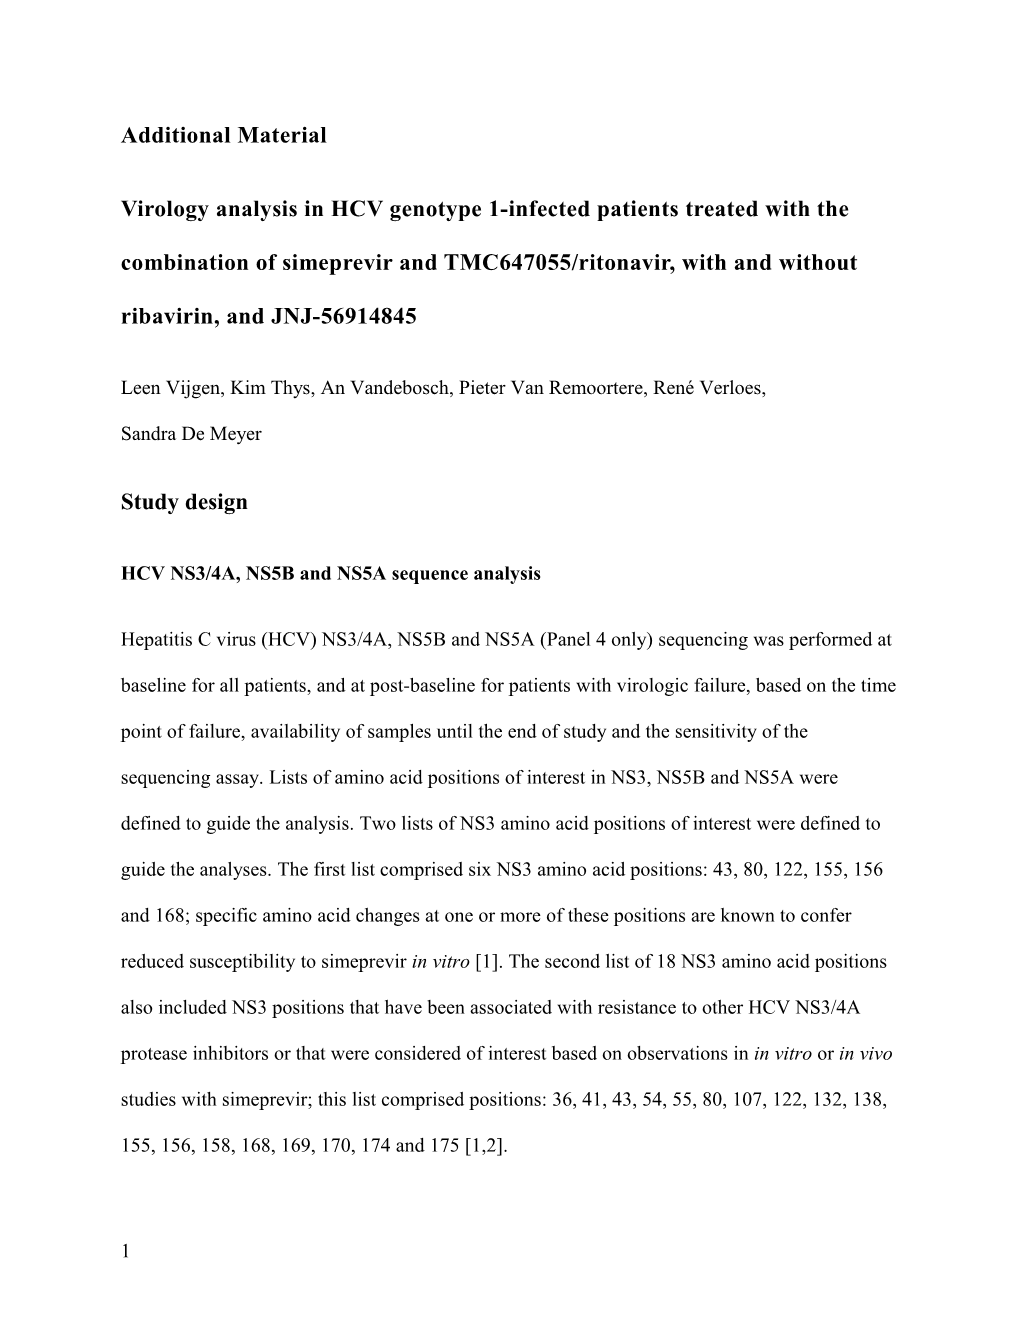 HCV NS3/4A, NS5B and NS5A Sequence Analysis